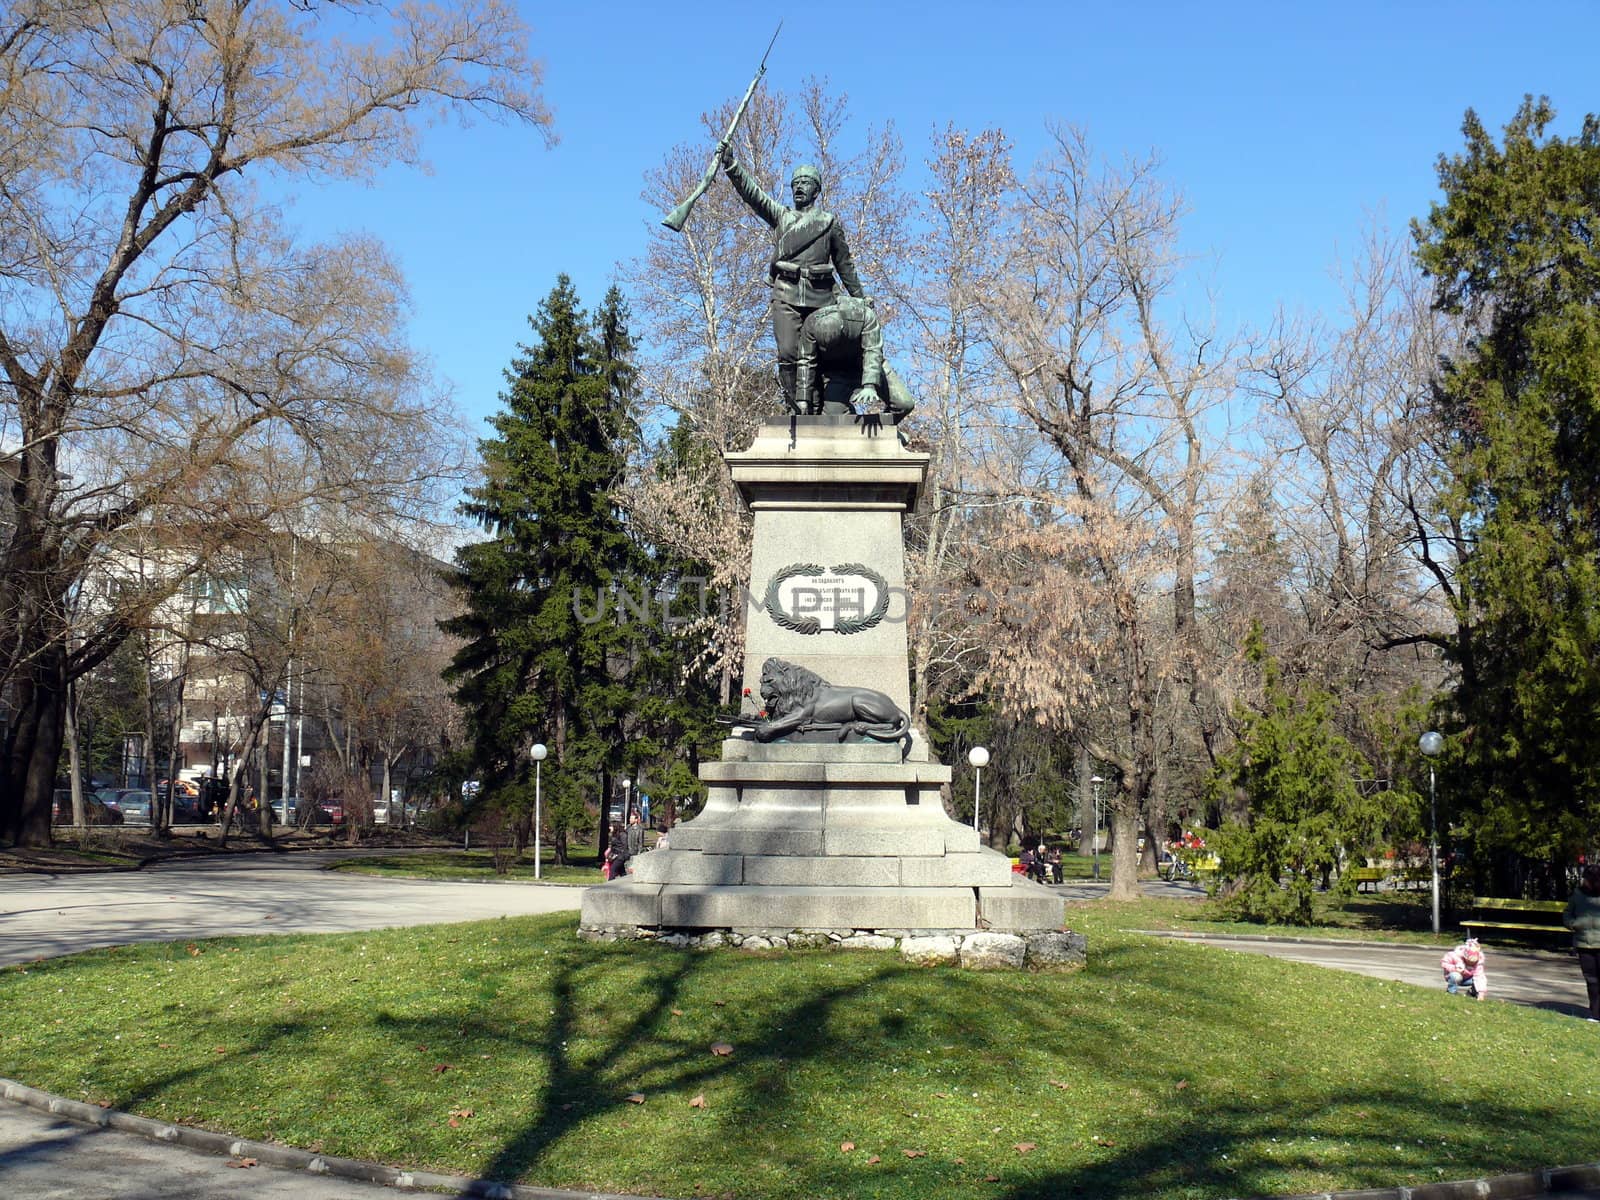 Monument for Serbian-Bulgarian war in center of Pleven, Bulgaria by Stoyanov